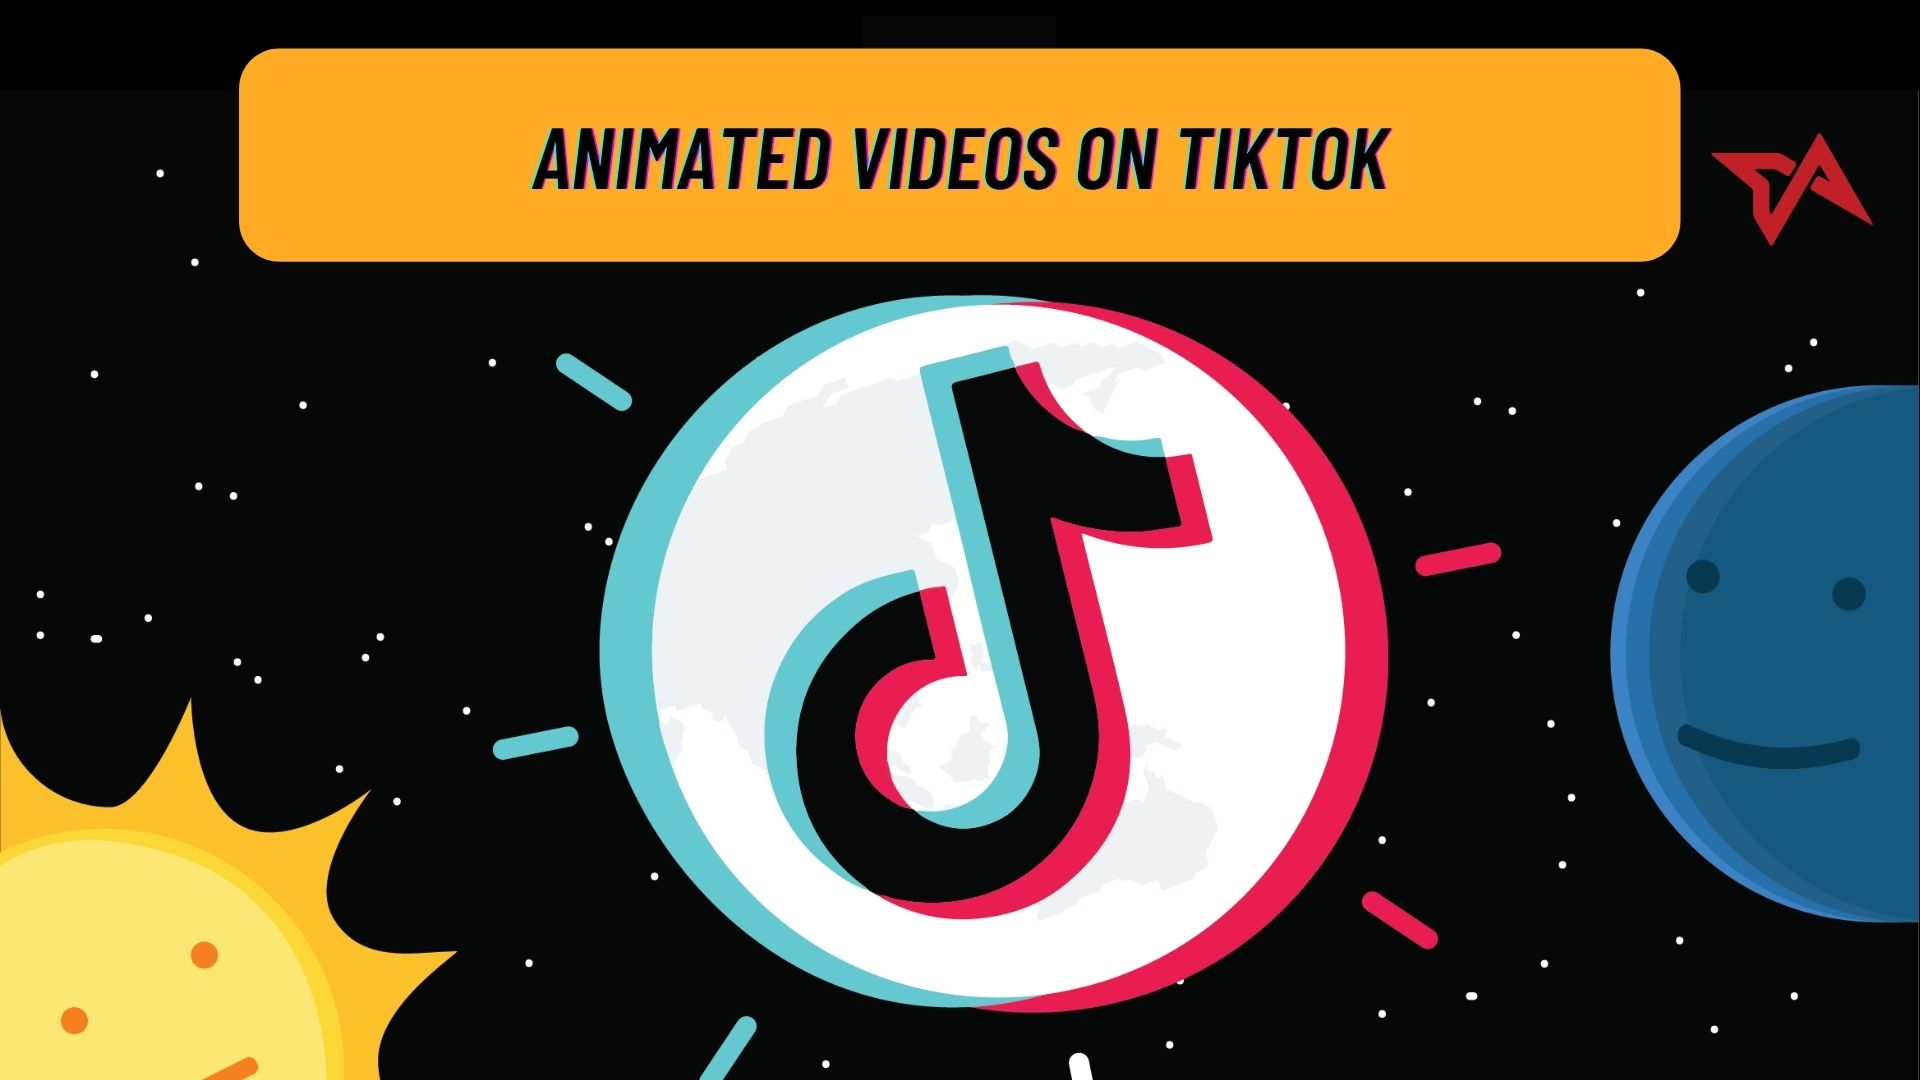 Should I post animated videos on the popular TikTok platform?